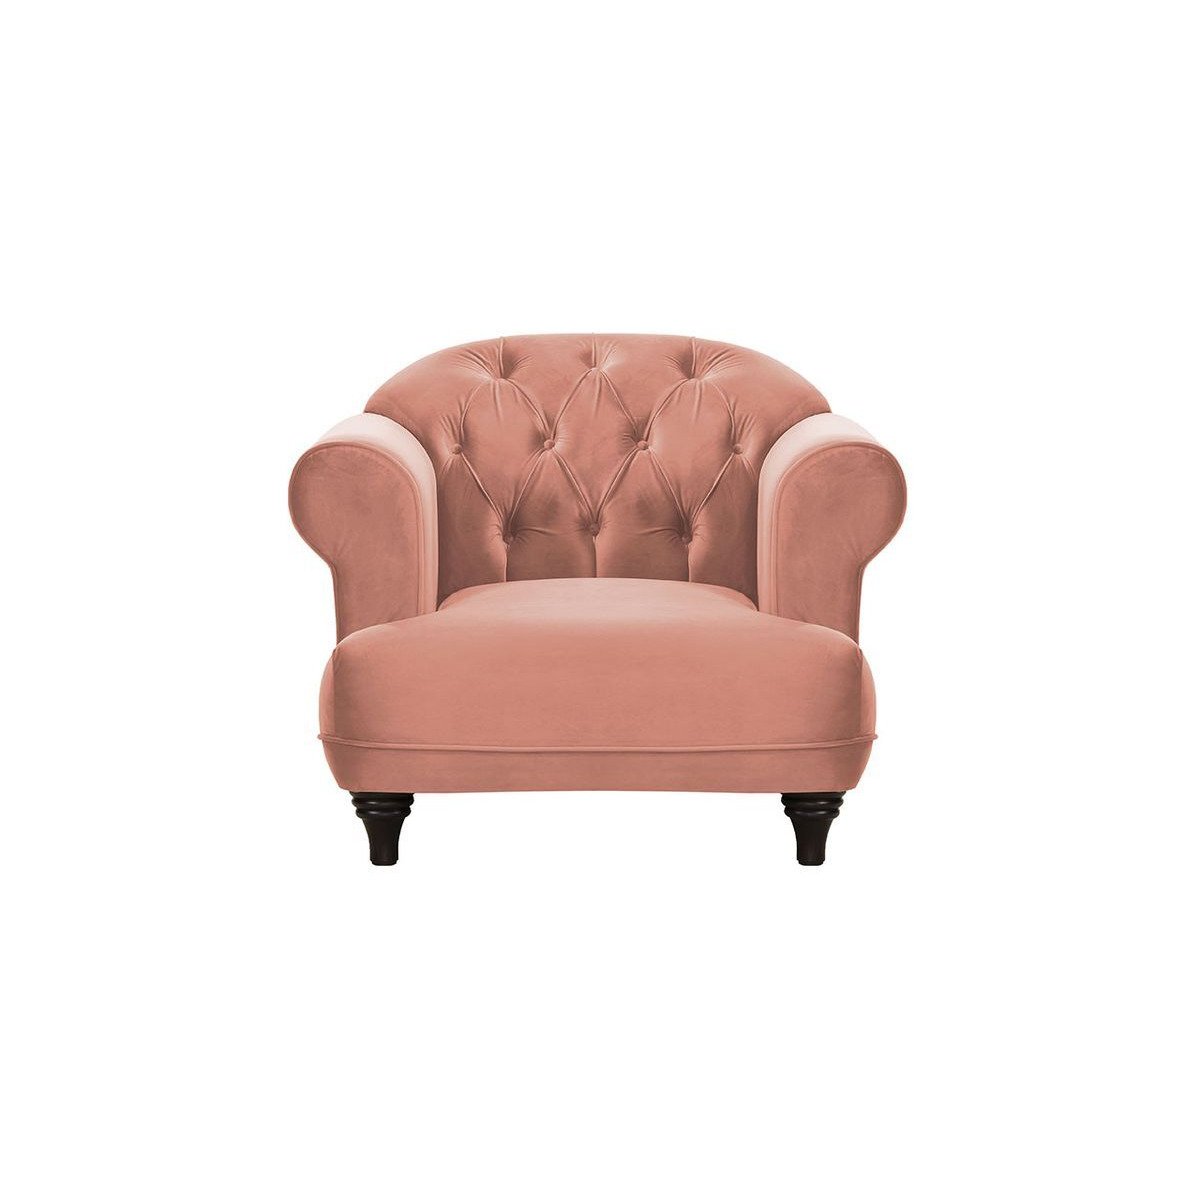 Harto Armchair, dirty pink - image 1